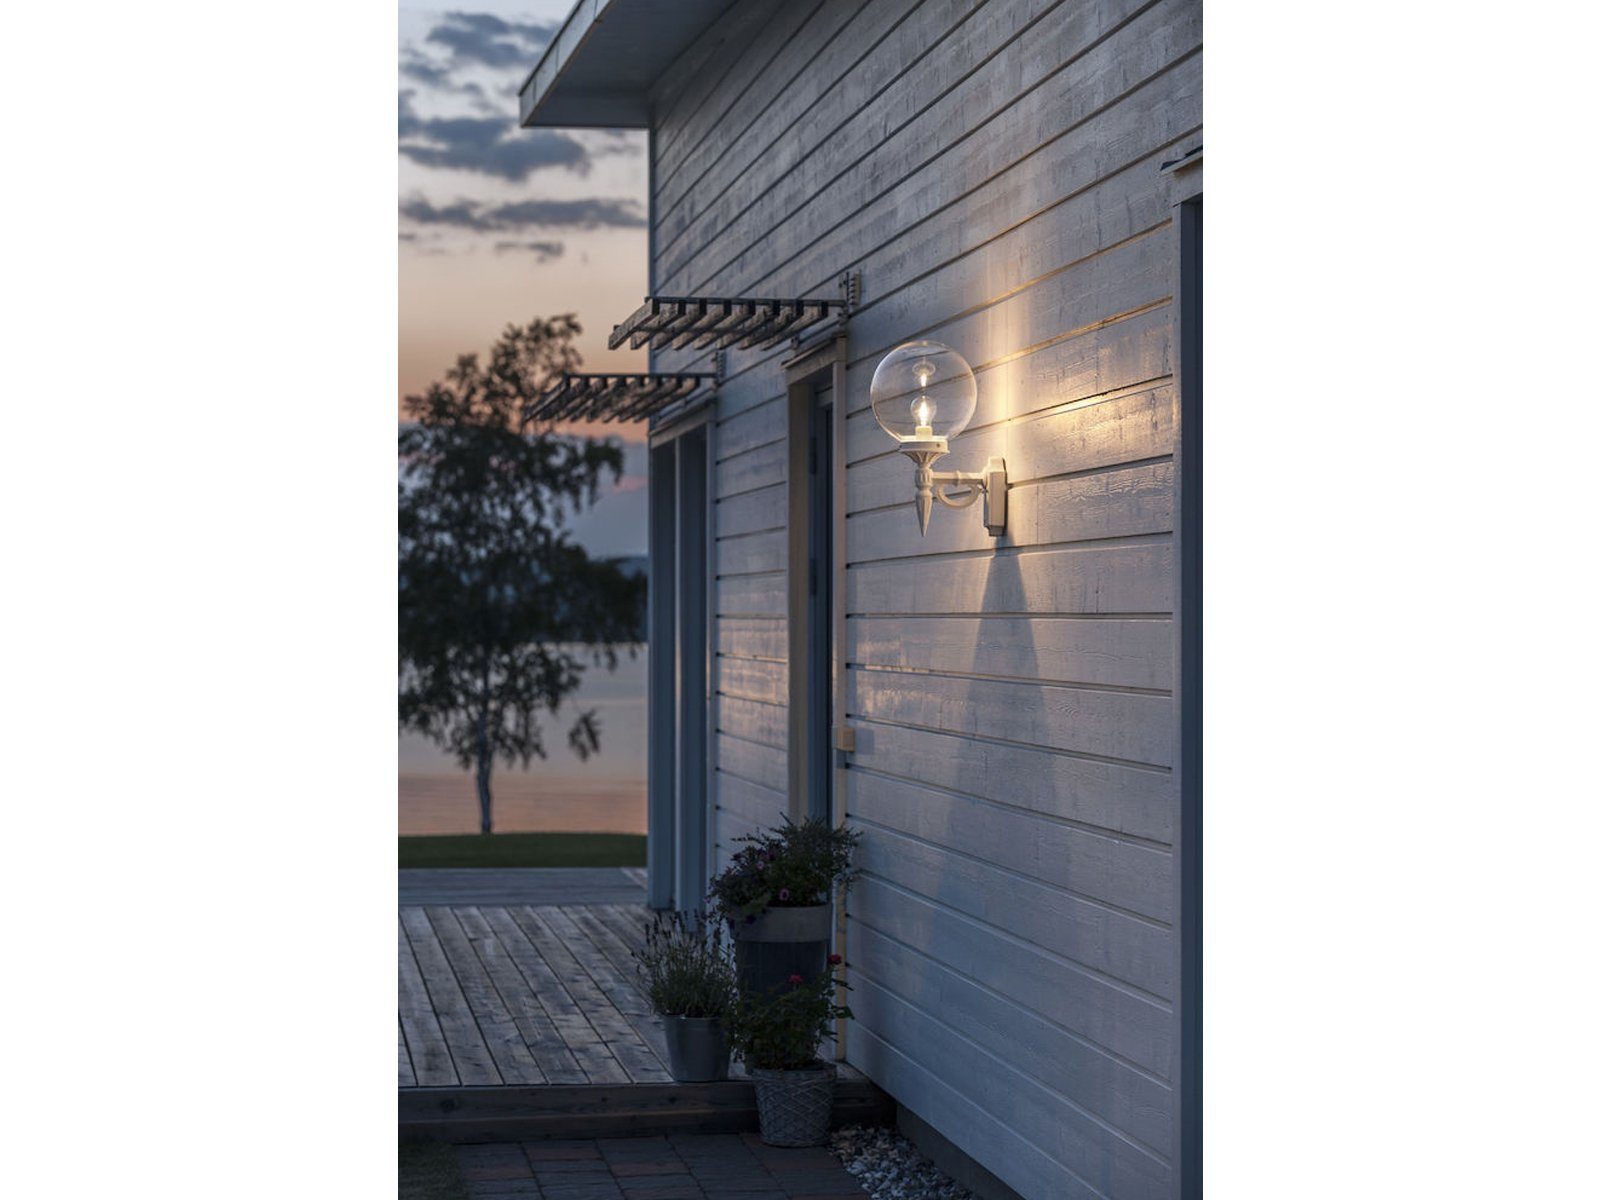 LED wechselbar, Dimmfunktion, meineWunschleuchte Weiß, warmweiß, Fassadenbeleuchtung LED Außen-Wandleuchte, Haus-wand beleuchten, 44cm H: Wand-laterne,